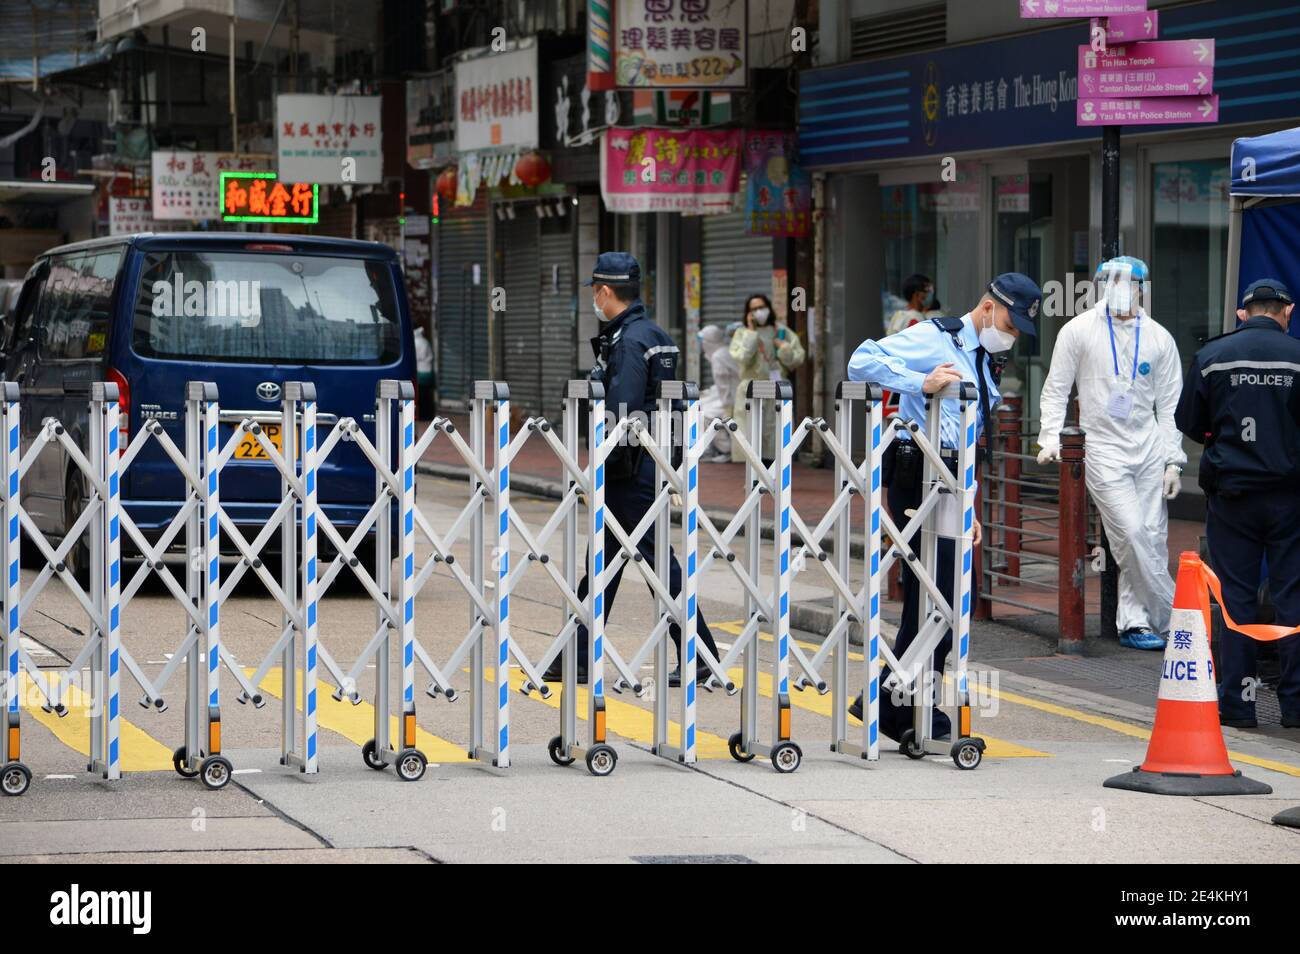 Hong Kong Police checkpoint during Covid-19 coronavirus pandemic lockdown in Yau Ma Tei, Kowloon, Hong Kong in January 2021 Stock Photo